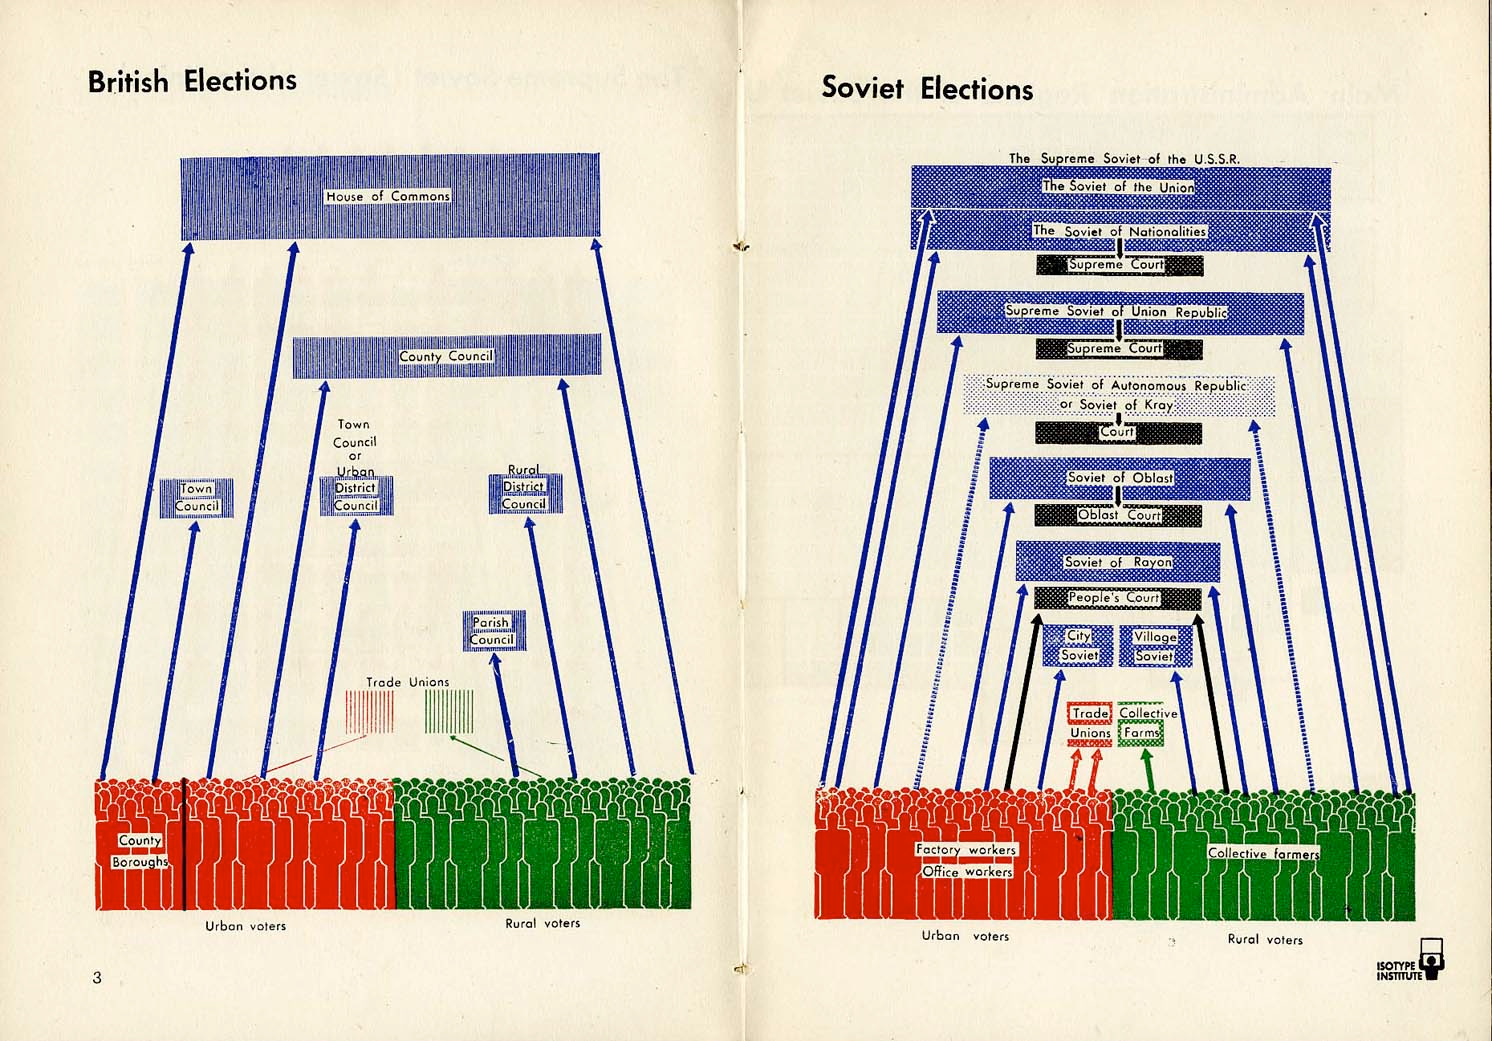 File:British vs. Soviet electoral system.png